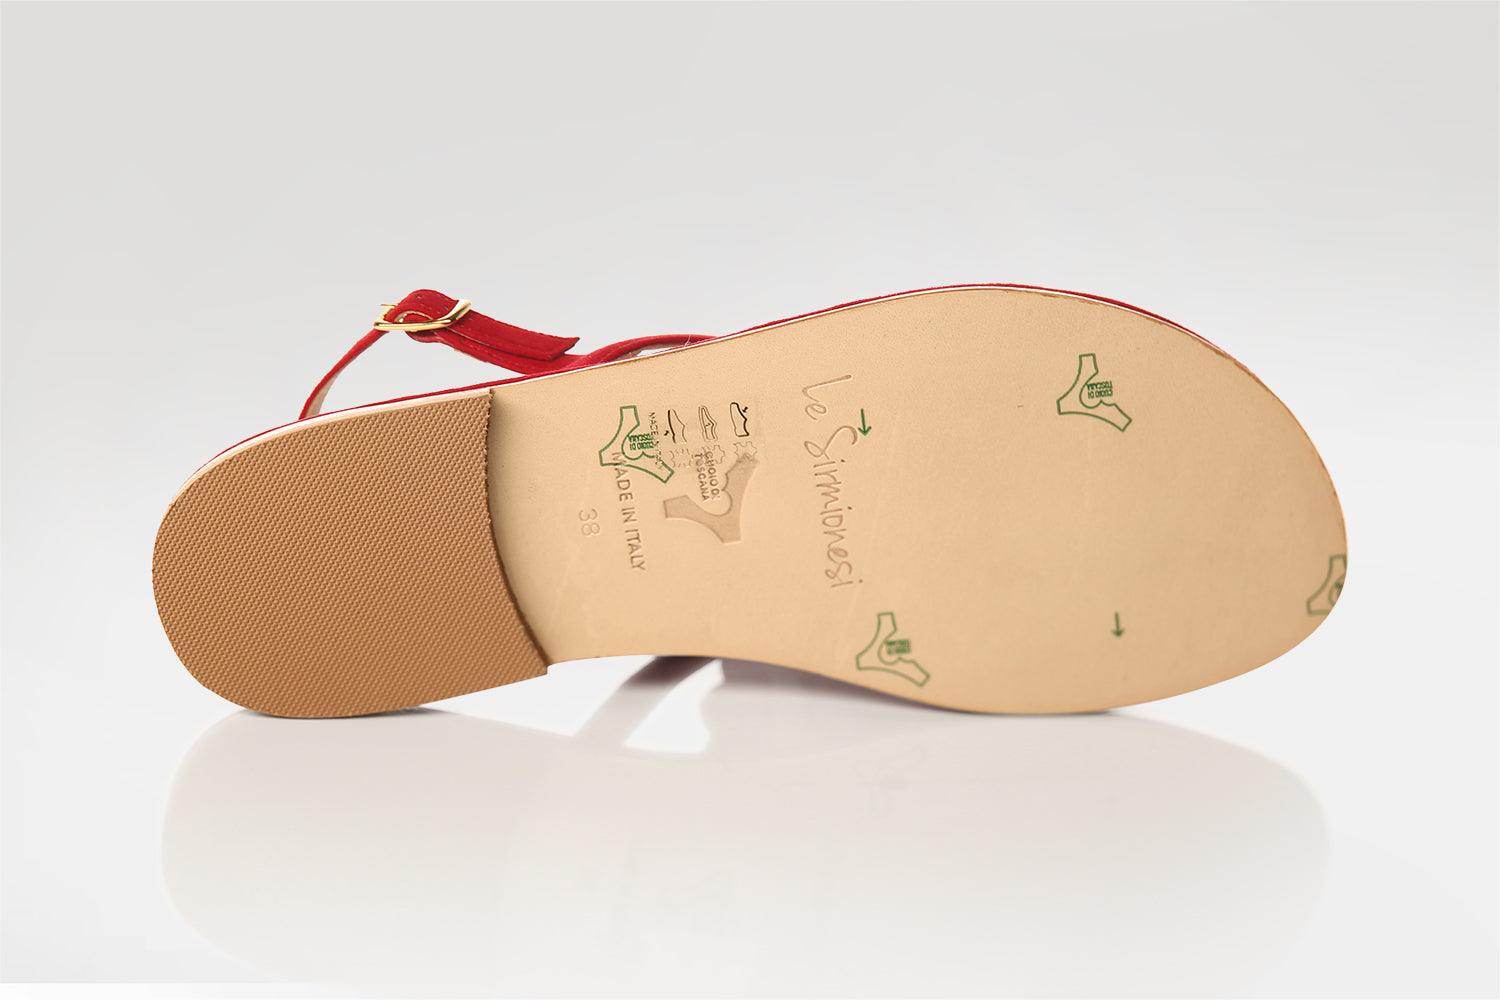 handmade Italian sandals, Tuscan leather sandals, Capri Italy sandals, flat sandals 